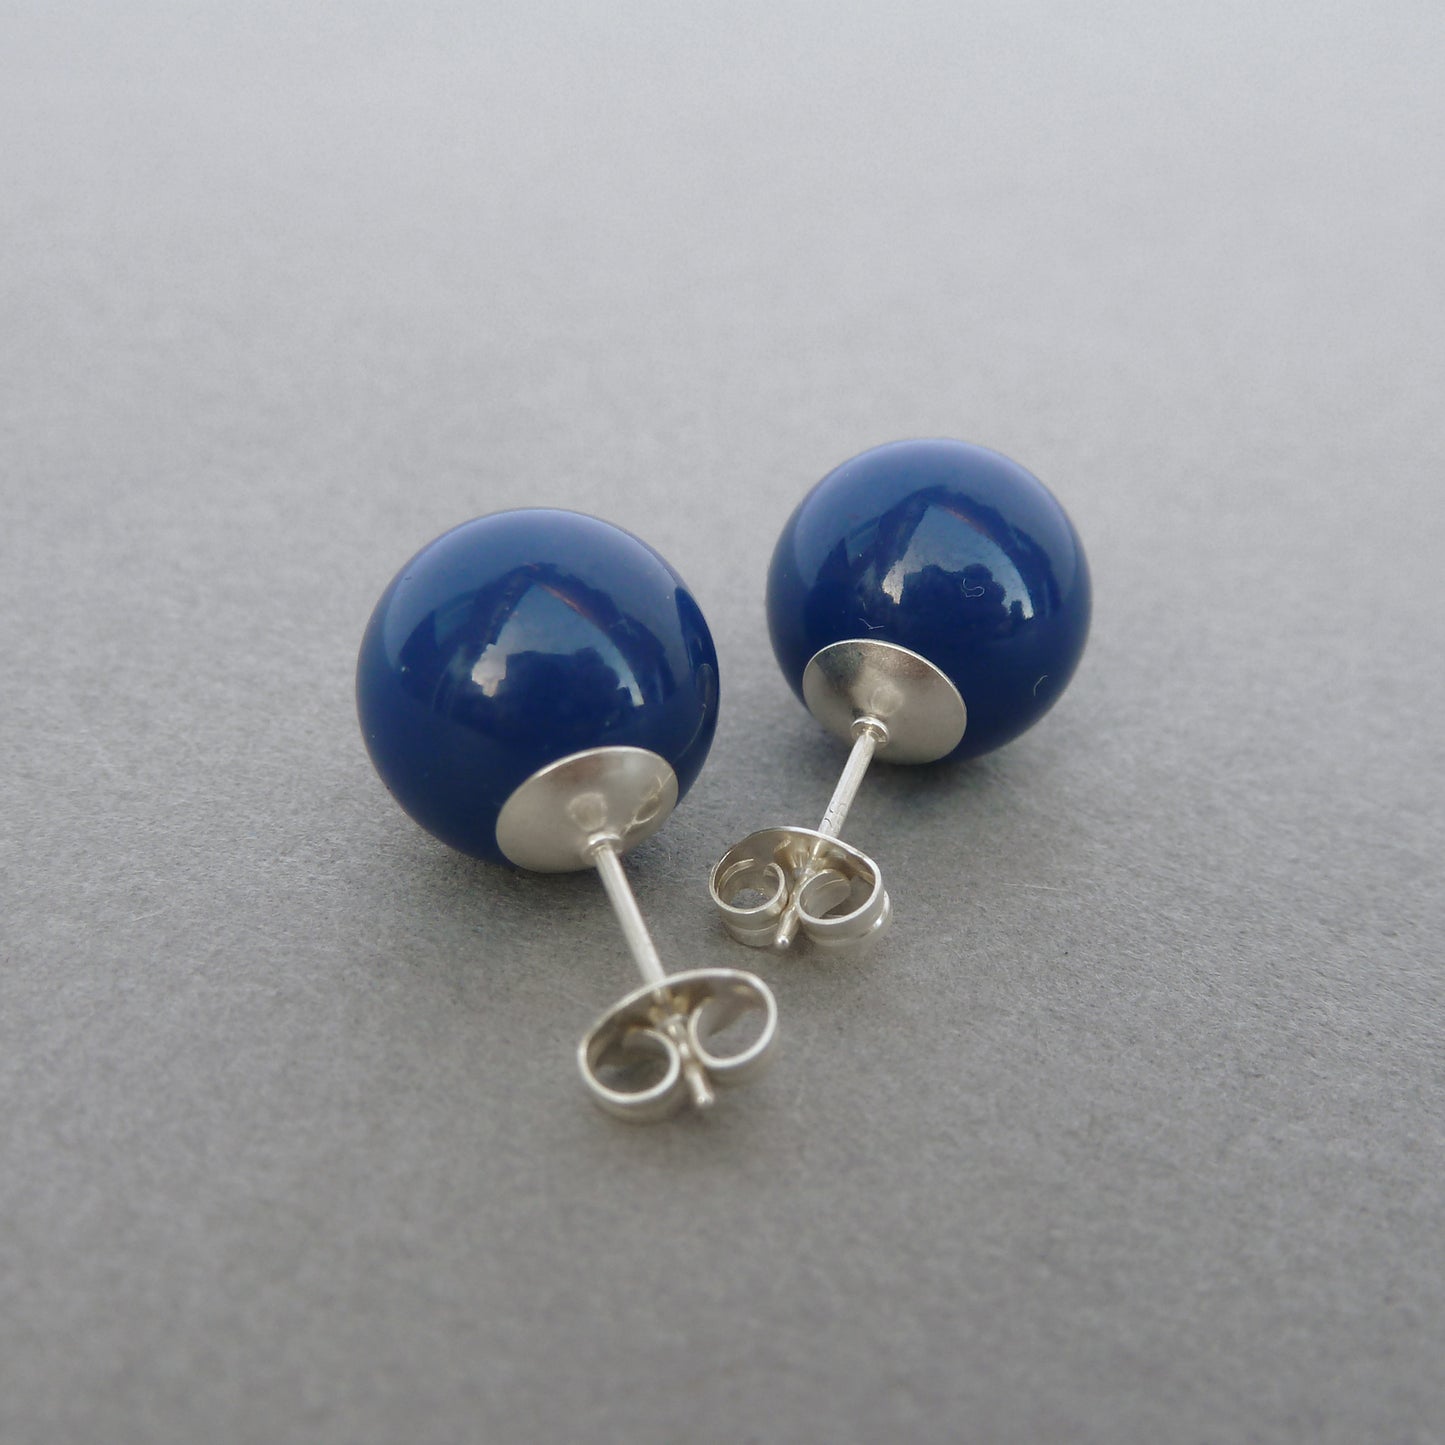 Chunky cobalt blue stud earrings